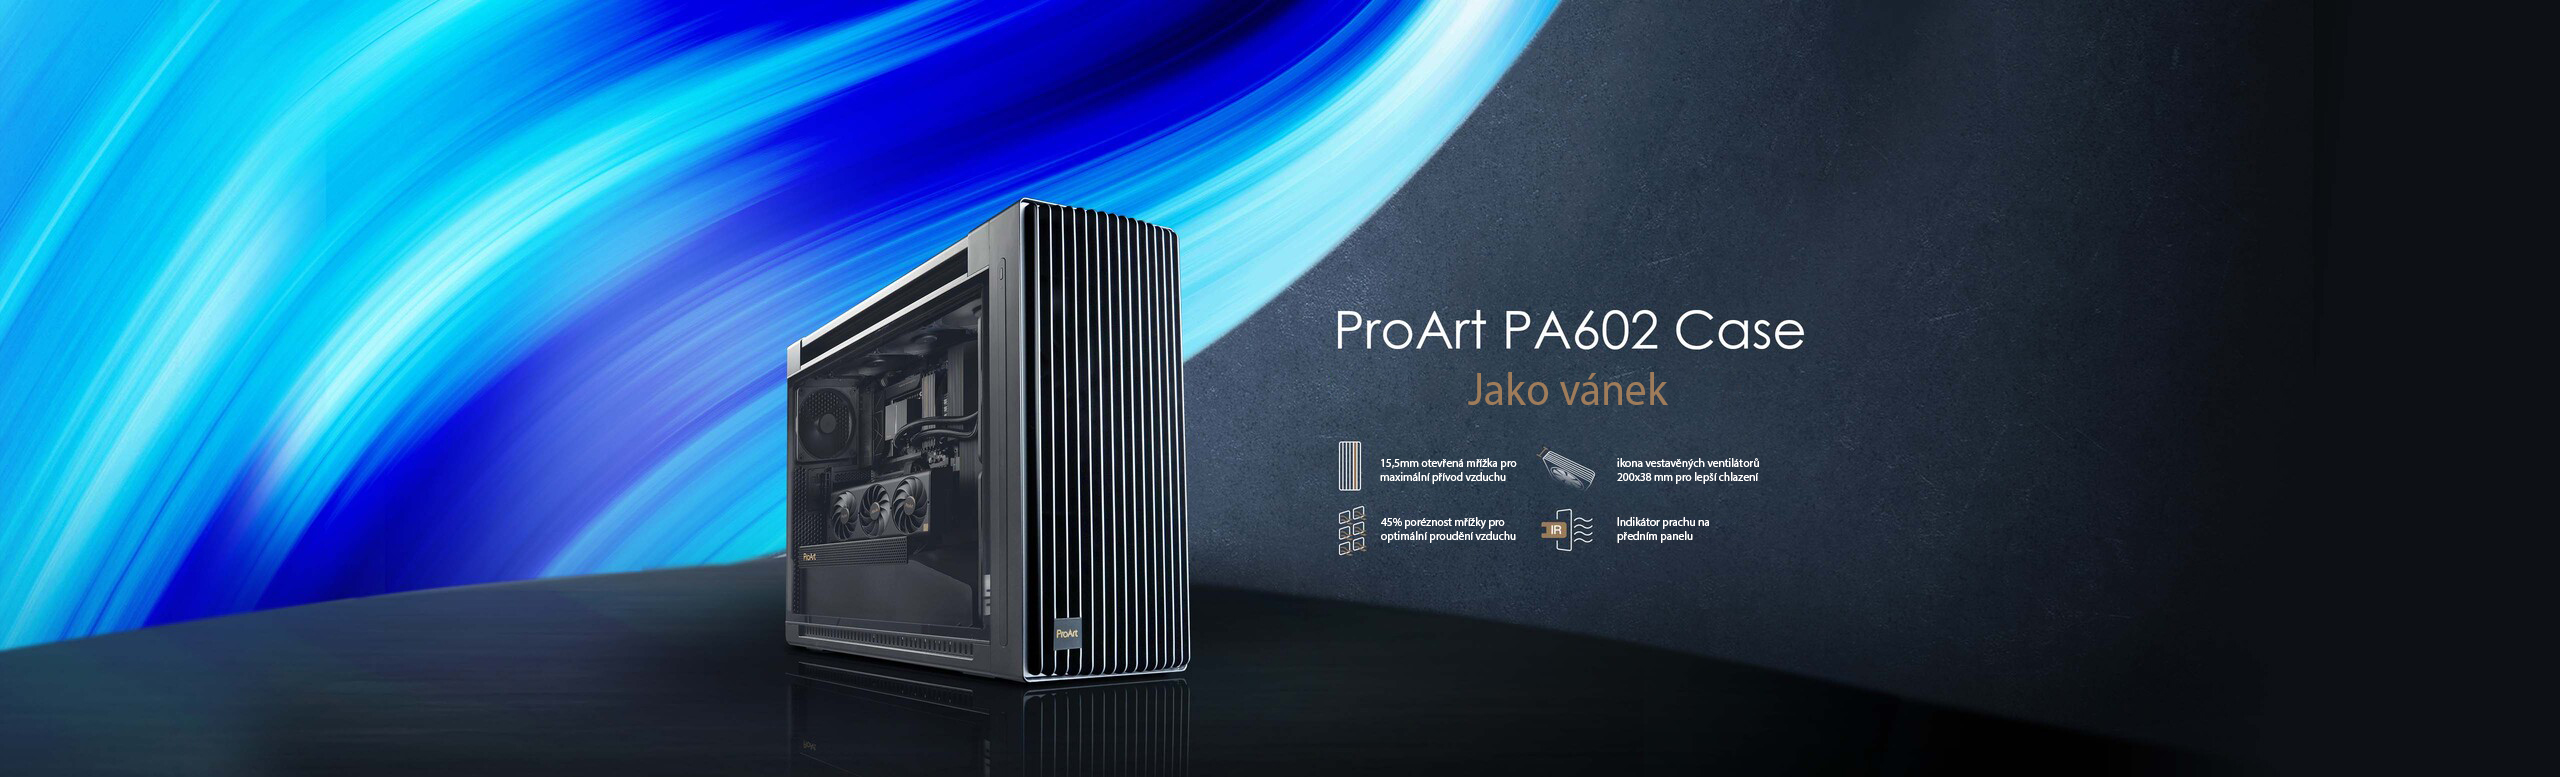 ProArt PA602 PC build key visual